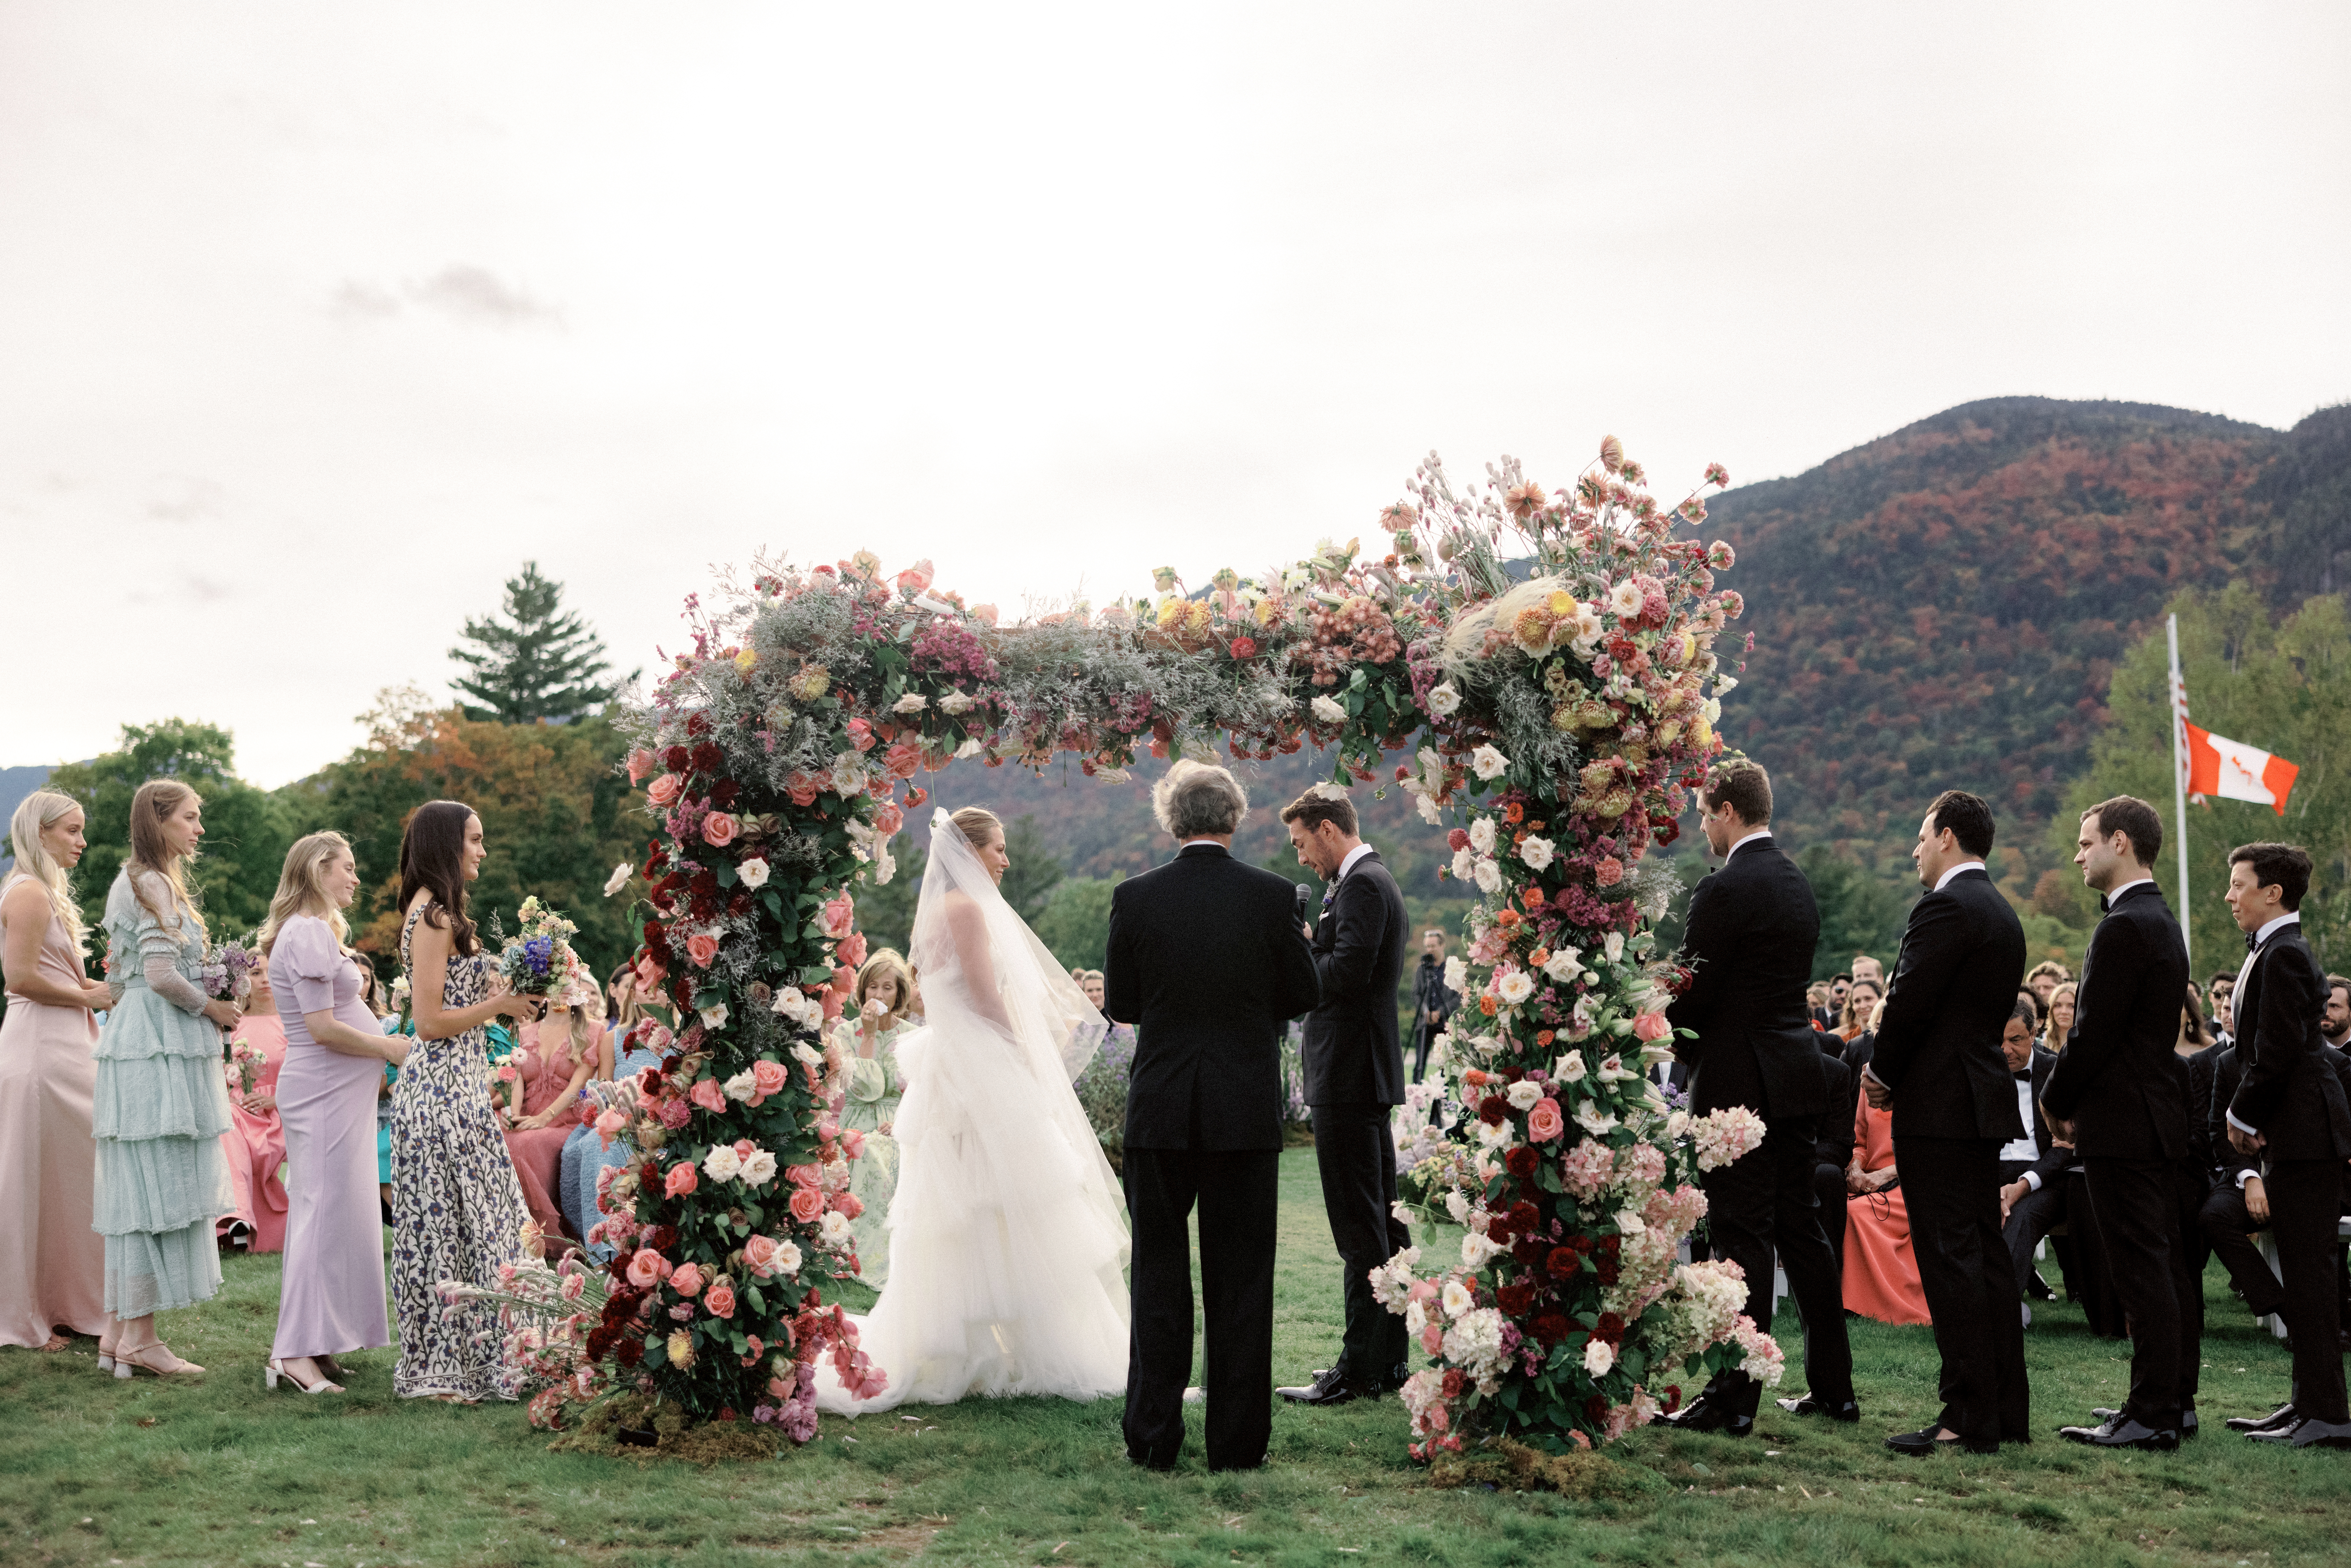 Wedding ceremony in the Adirondack mountains. Upstate New York Wedding image by Jenny Fu Studio